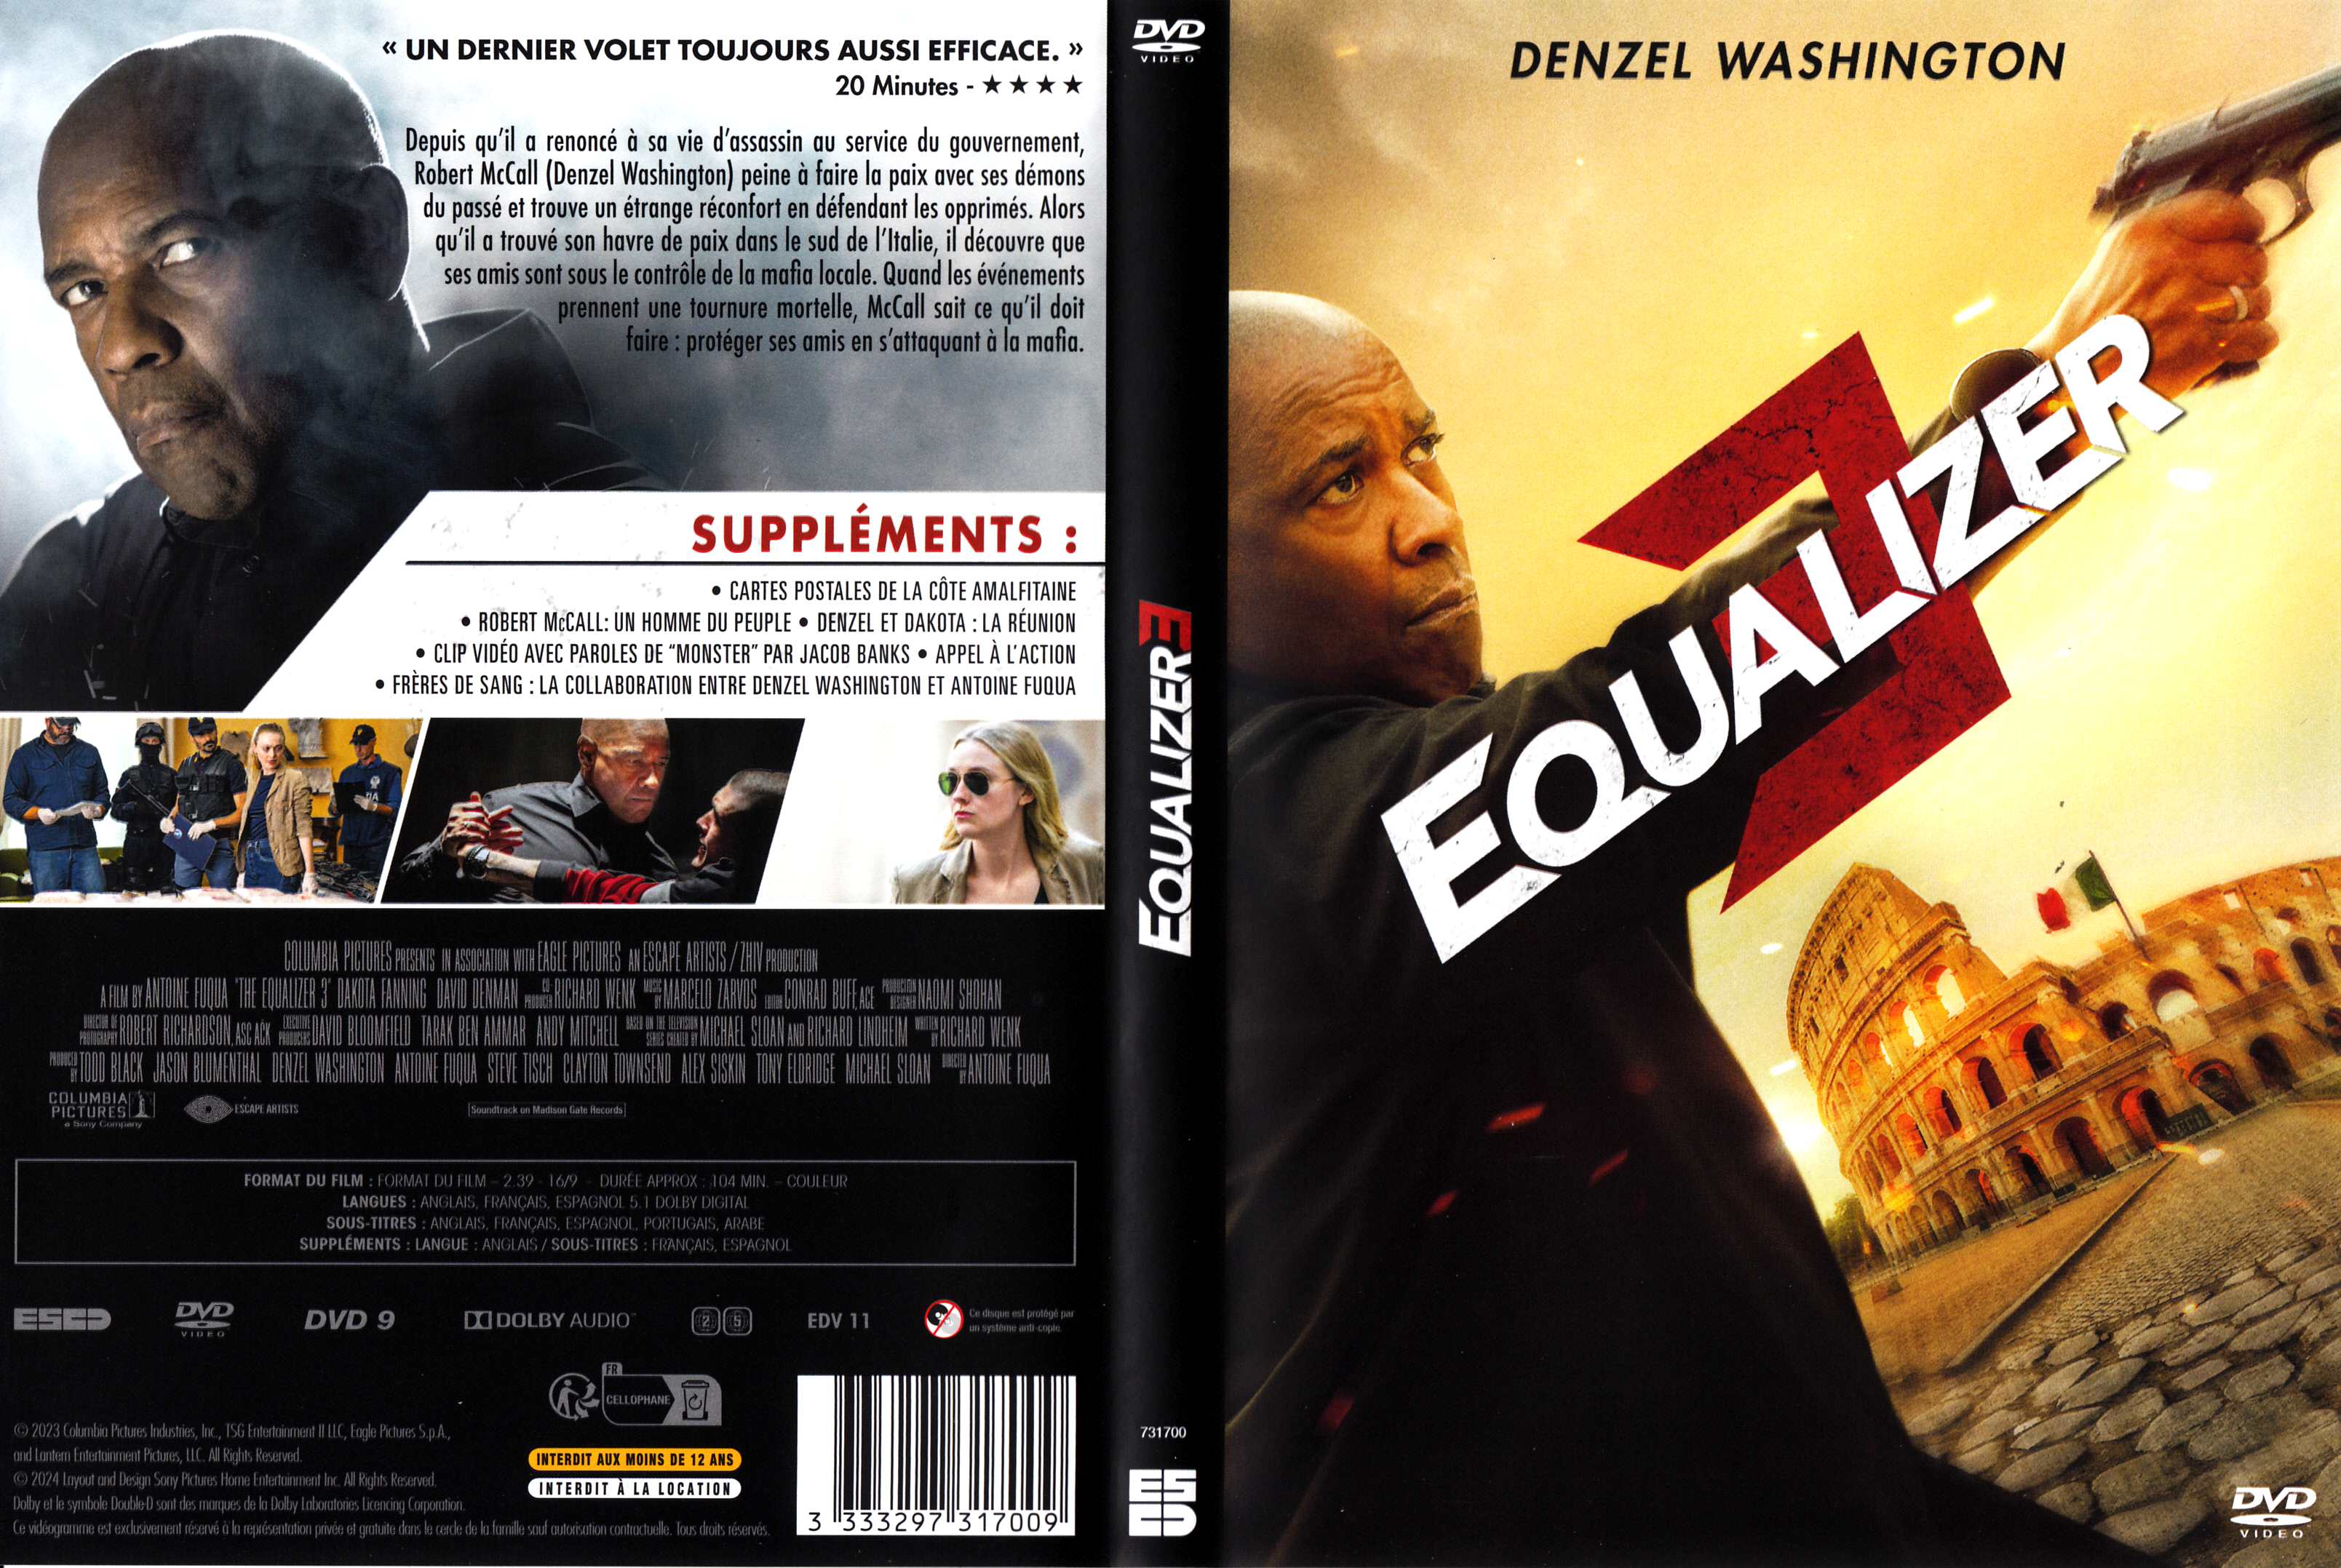 Jaquette DVD Equalizer 3